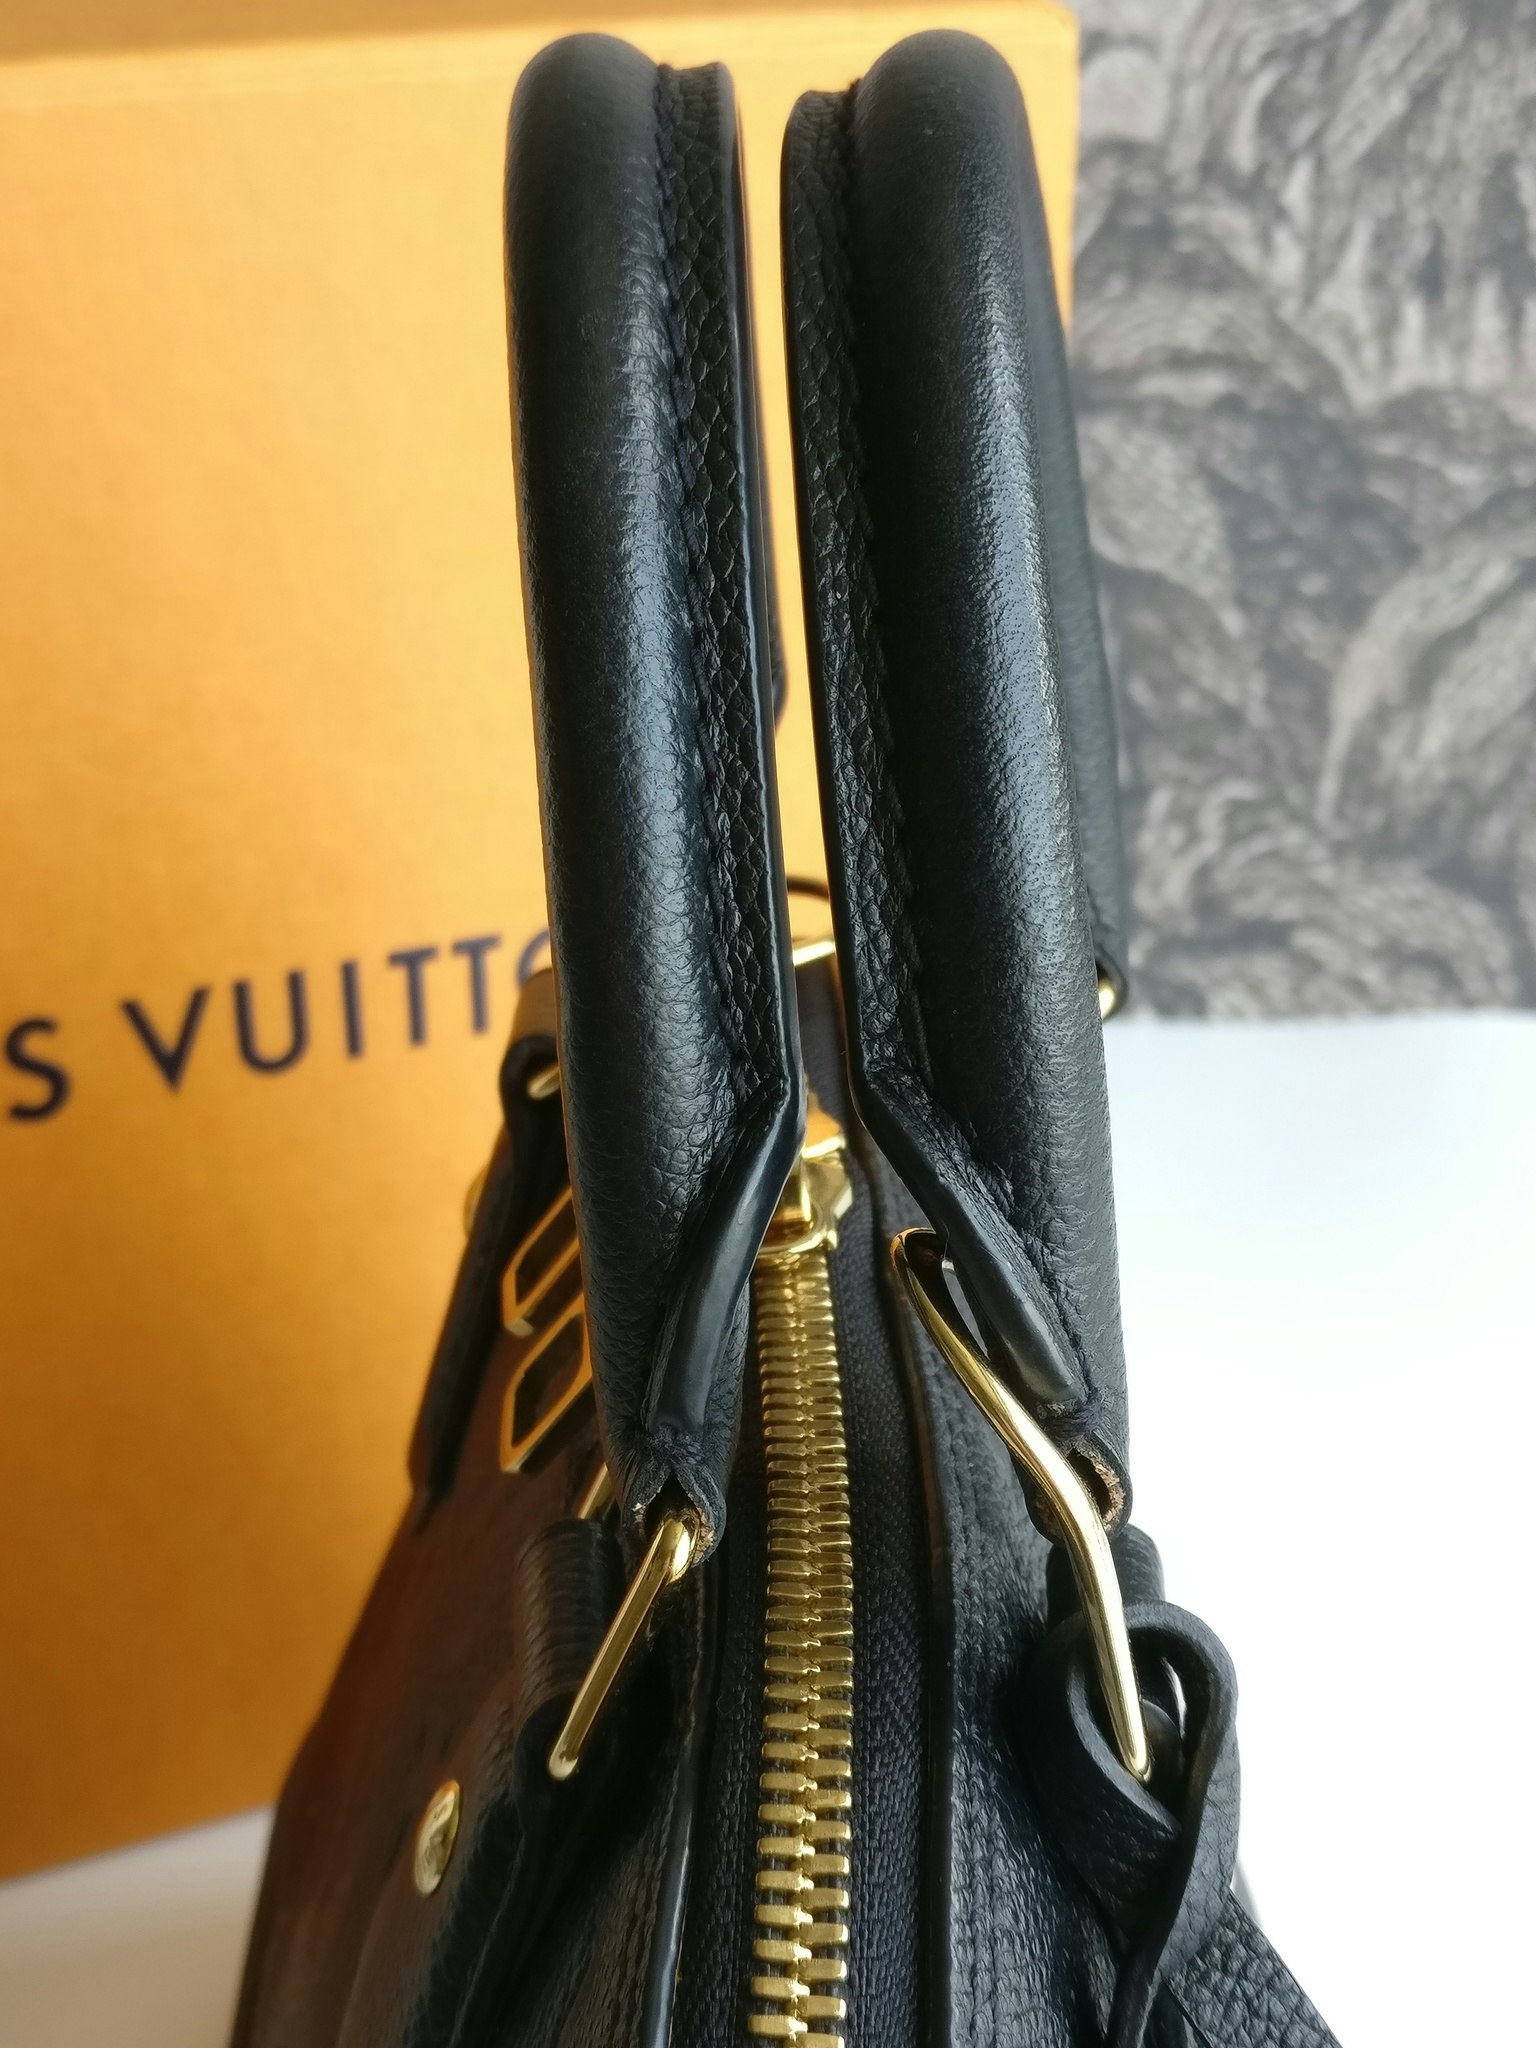 Louis Vuitton "Monogram Empreinte Neo Alma PM" M44885  Women's 2WAY Bag